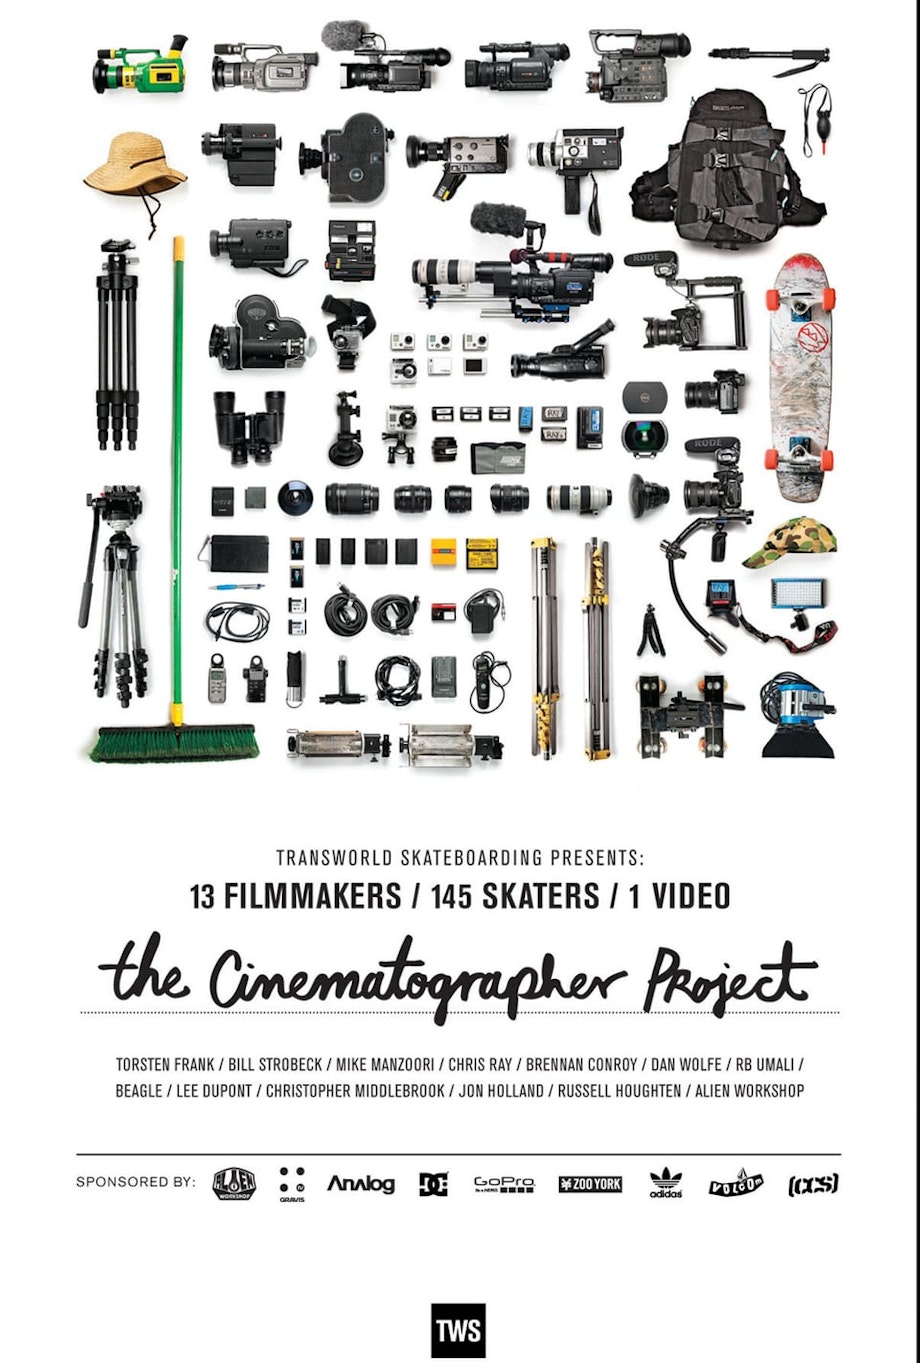 The Cinematographer Project - TransWorld SKATEboarding